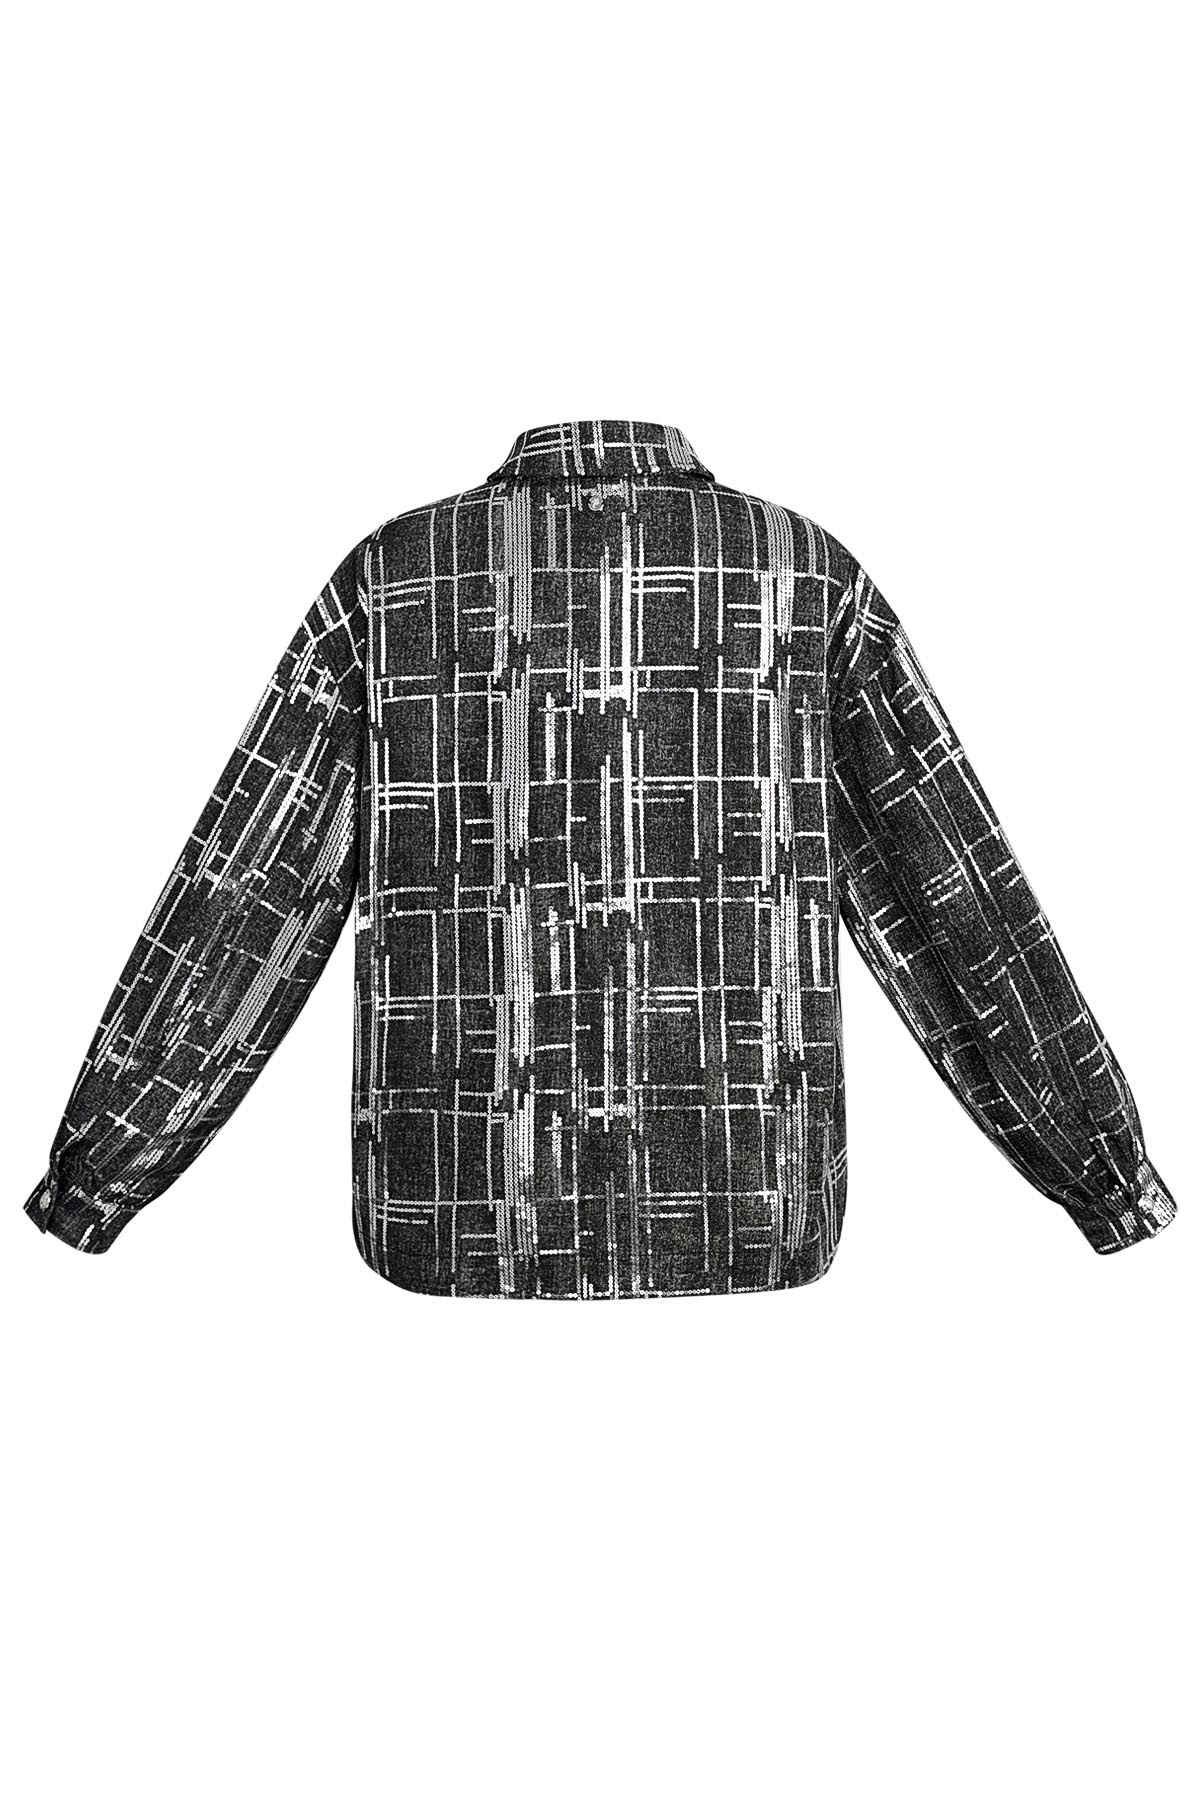 Jacket denim look with sequins - black - M Picture7